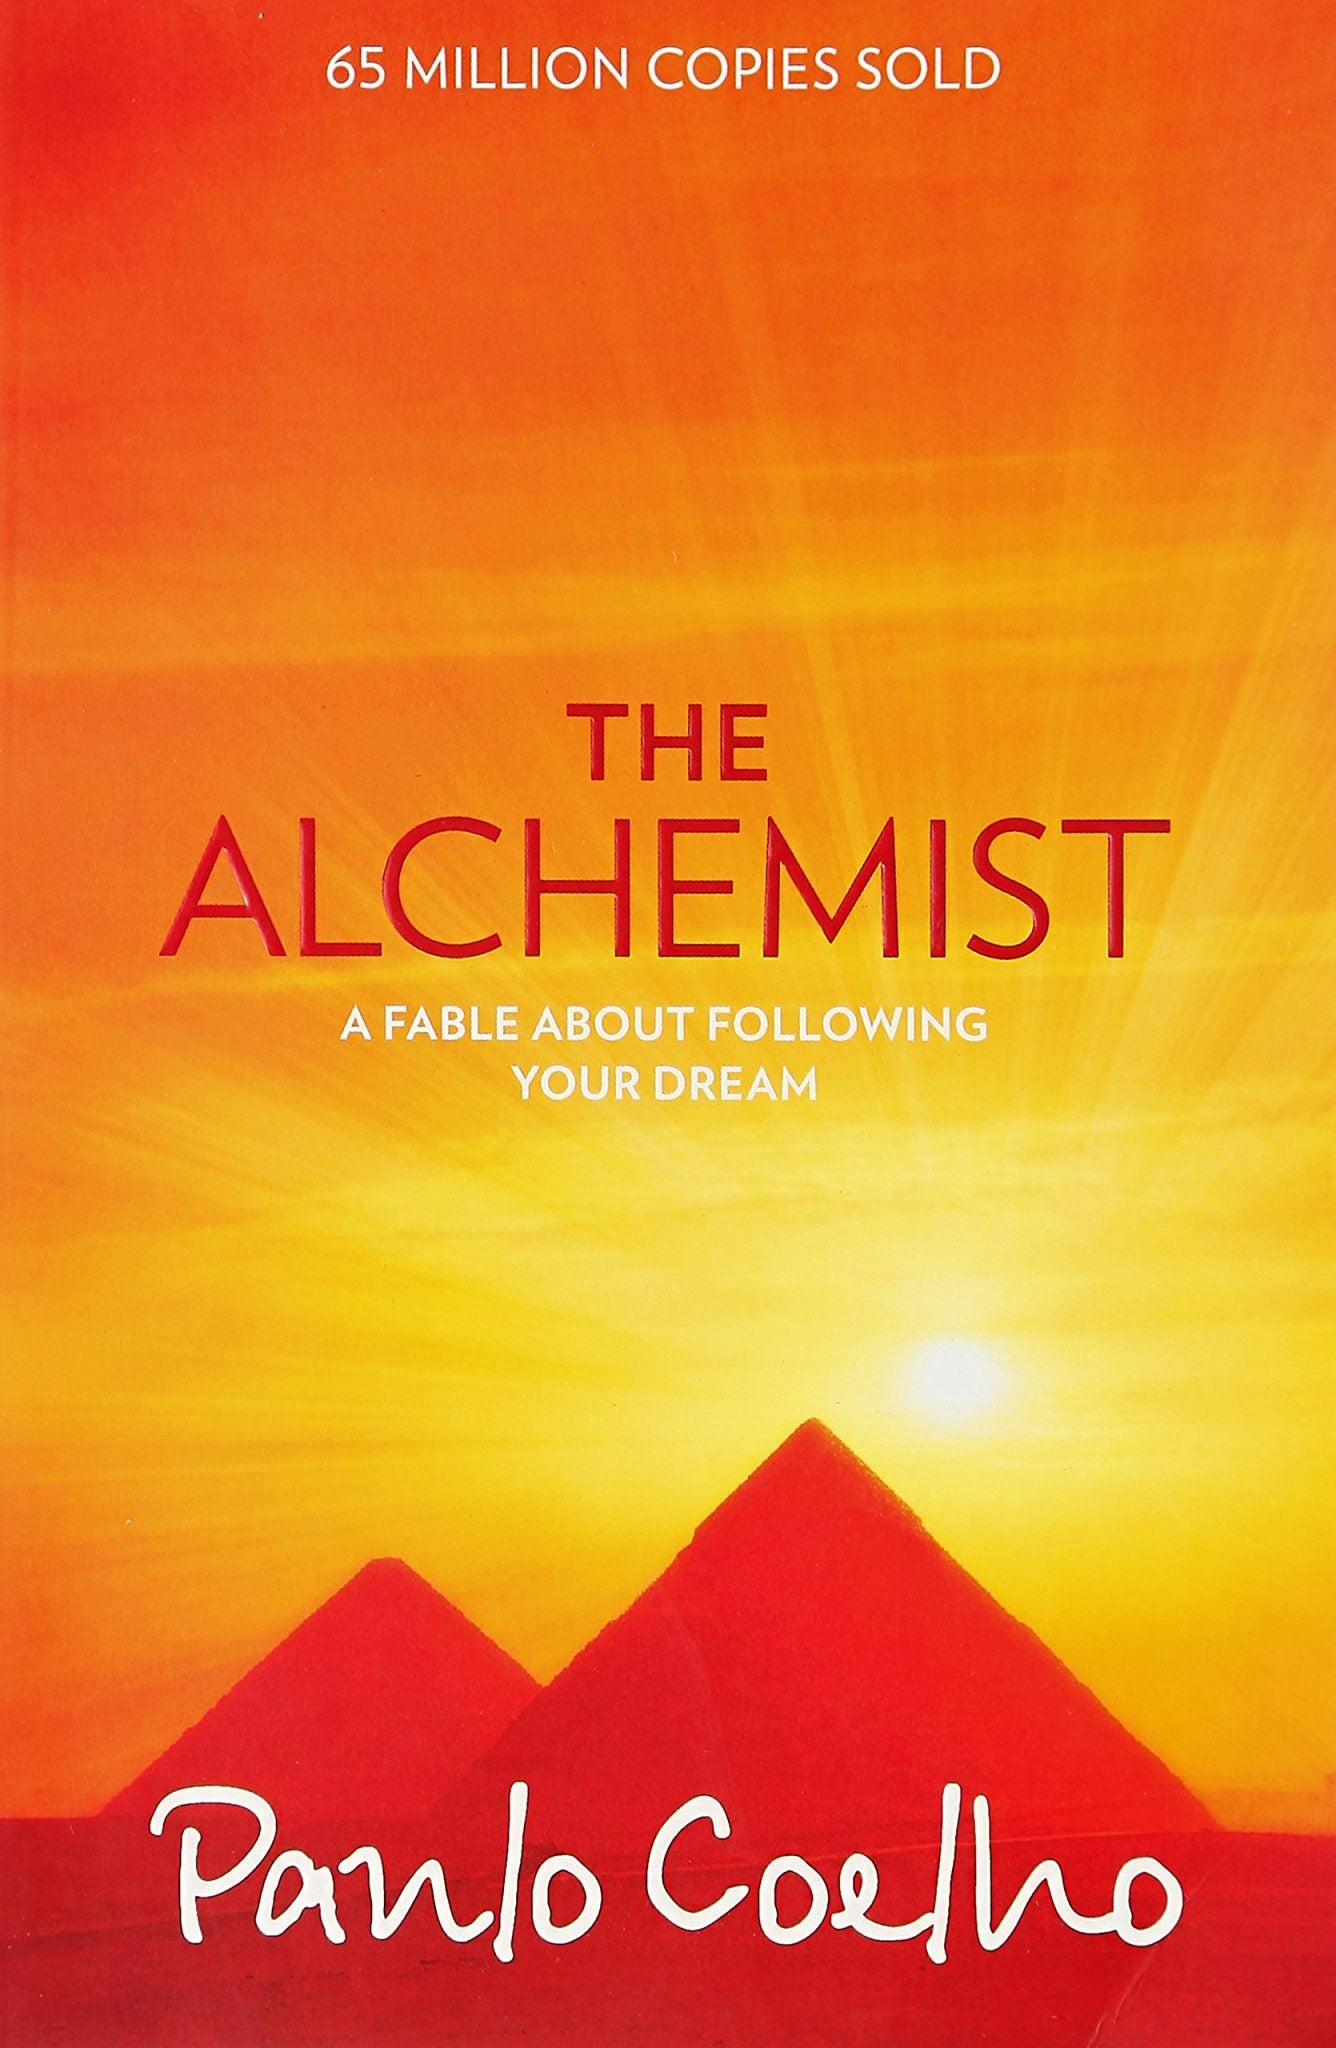 The Alchemist by Paulo Coelho (book)